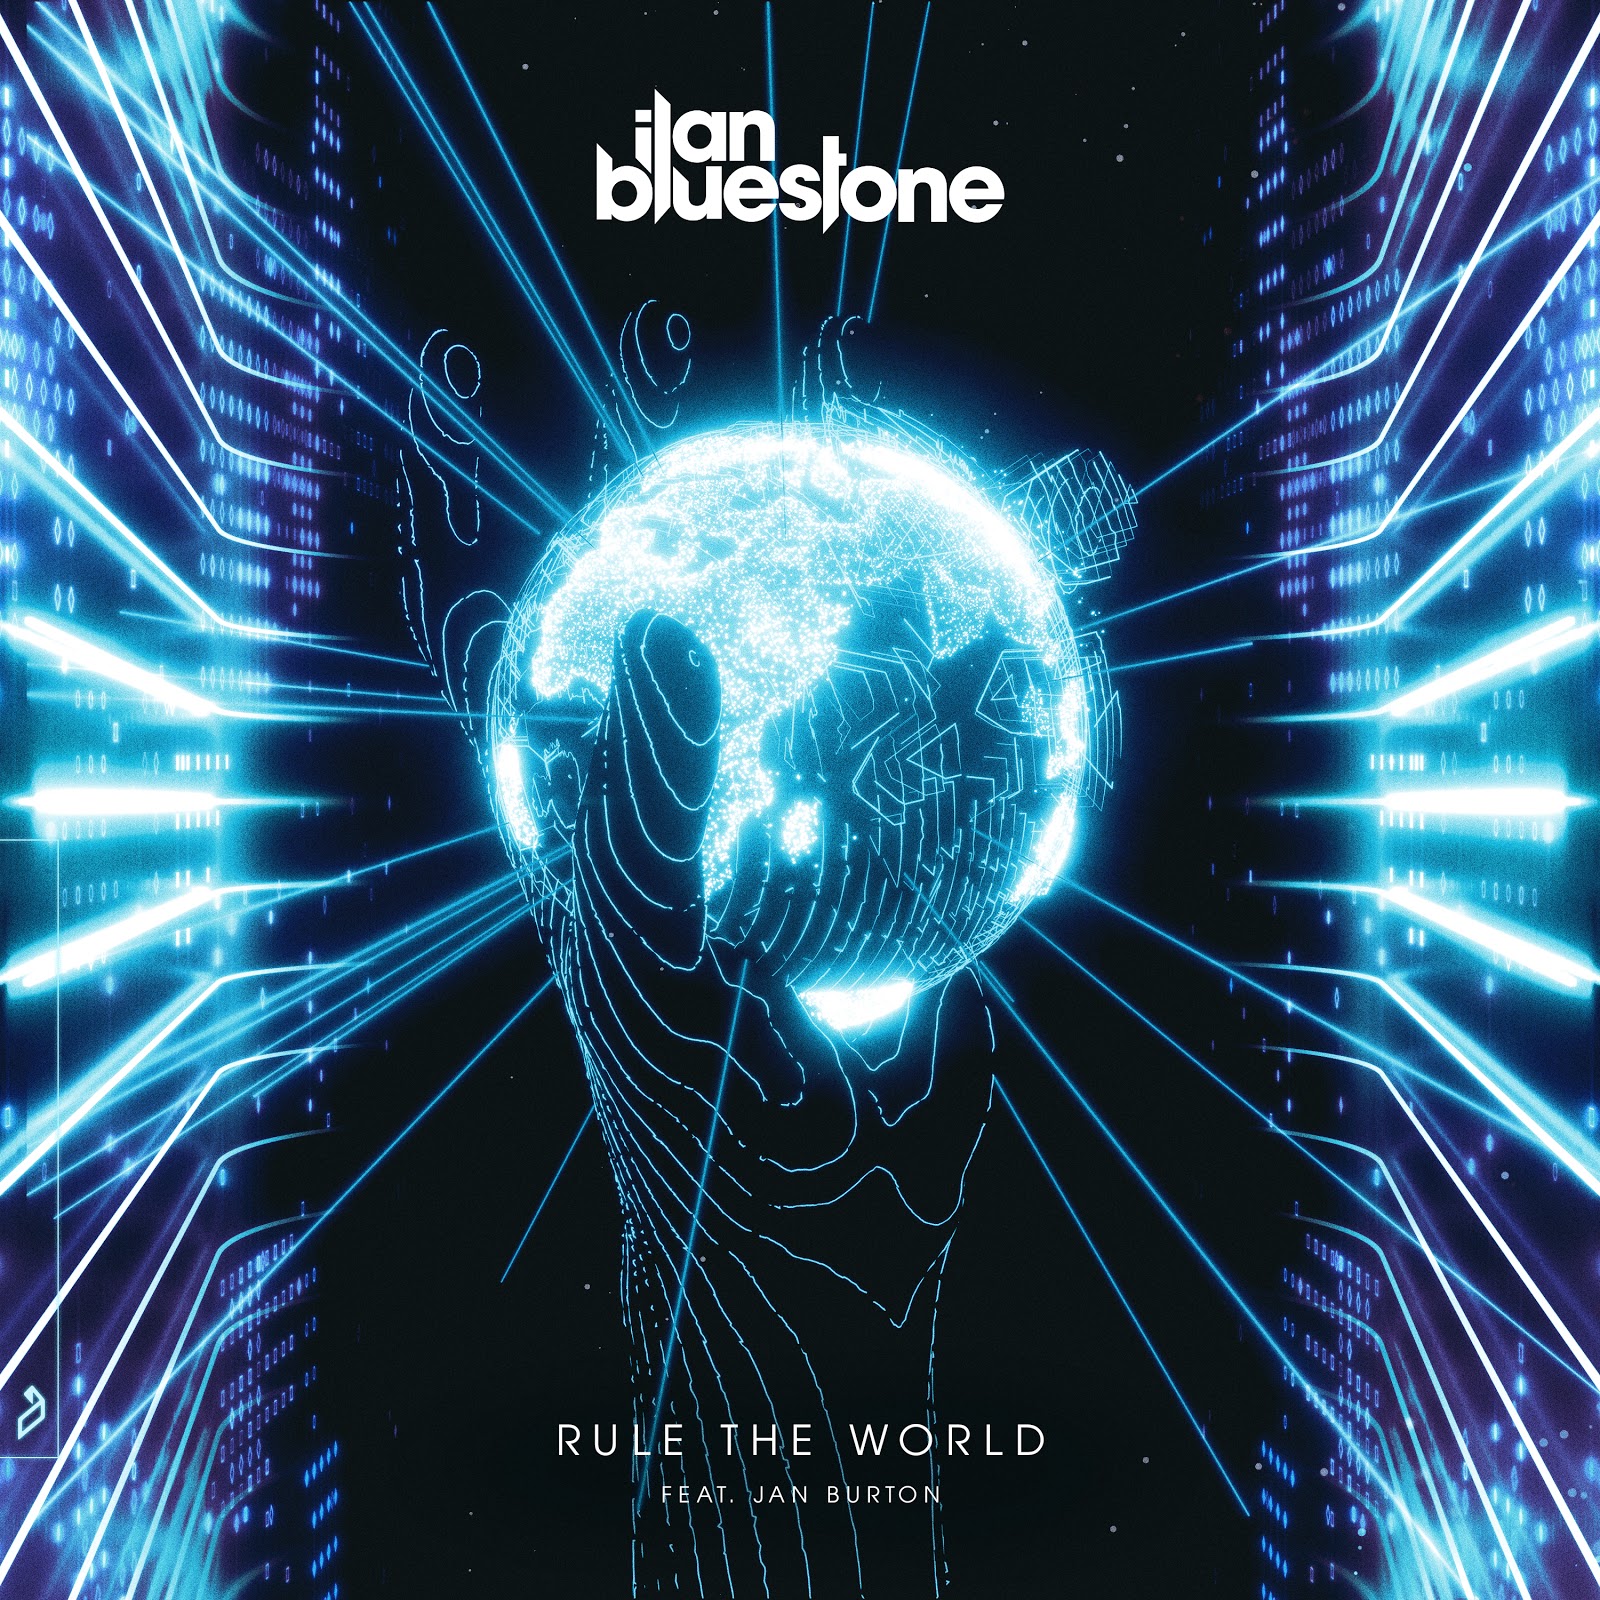 ilan Bluestone feat. Jan Burton presents Rule The World on Anjunabeats